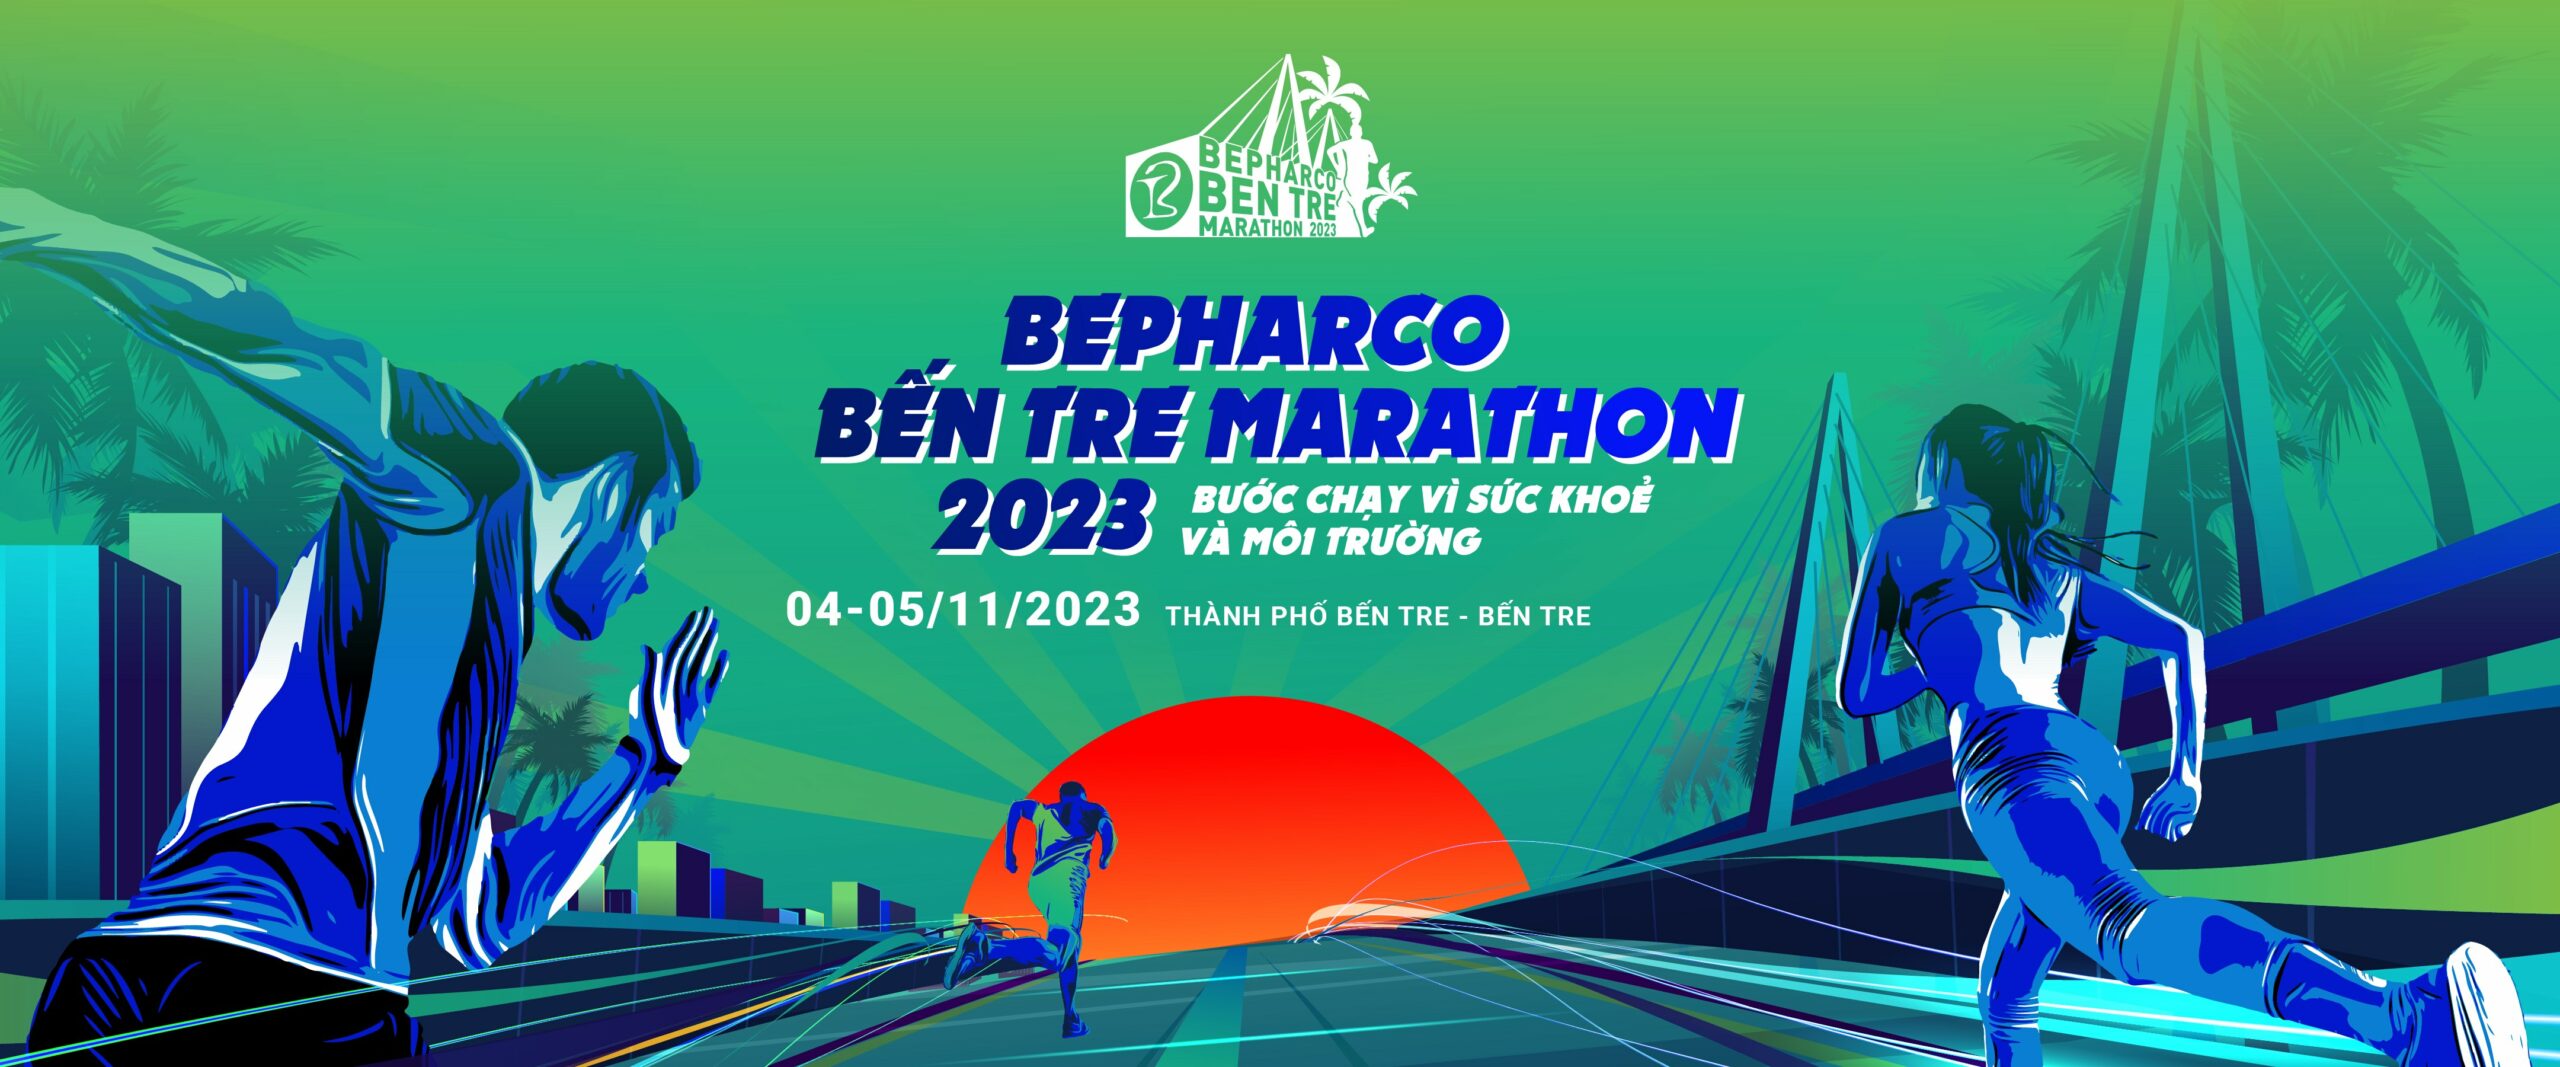 Bepharco Bến Tre Marathon 2023